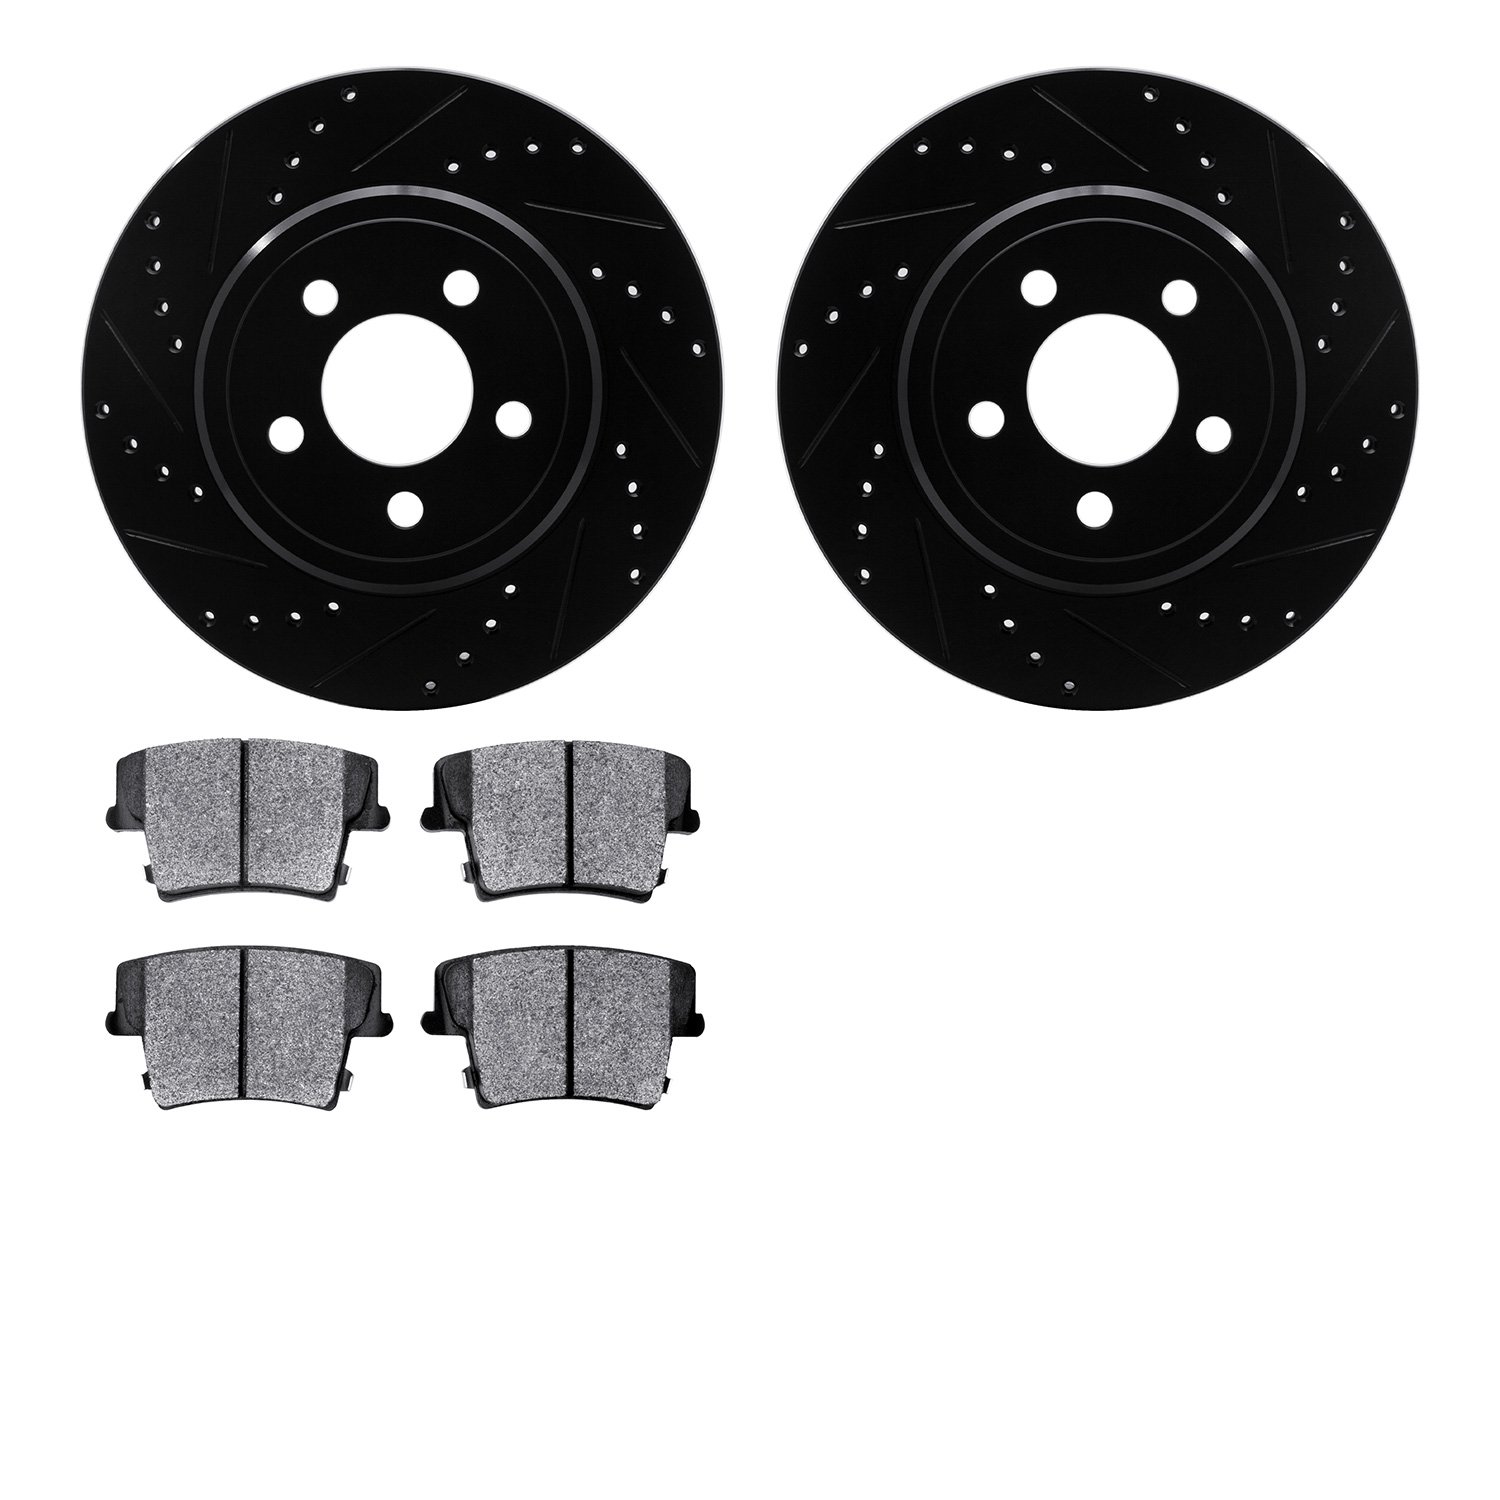 8302-39035 Drilled/Slotted Brake Rotors with 3000-Series Ceramic Brake Pads Kit [Black], Fits Select Mopar, Position: Rear